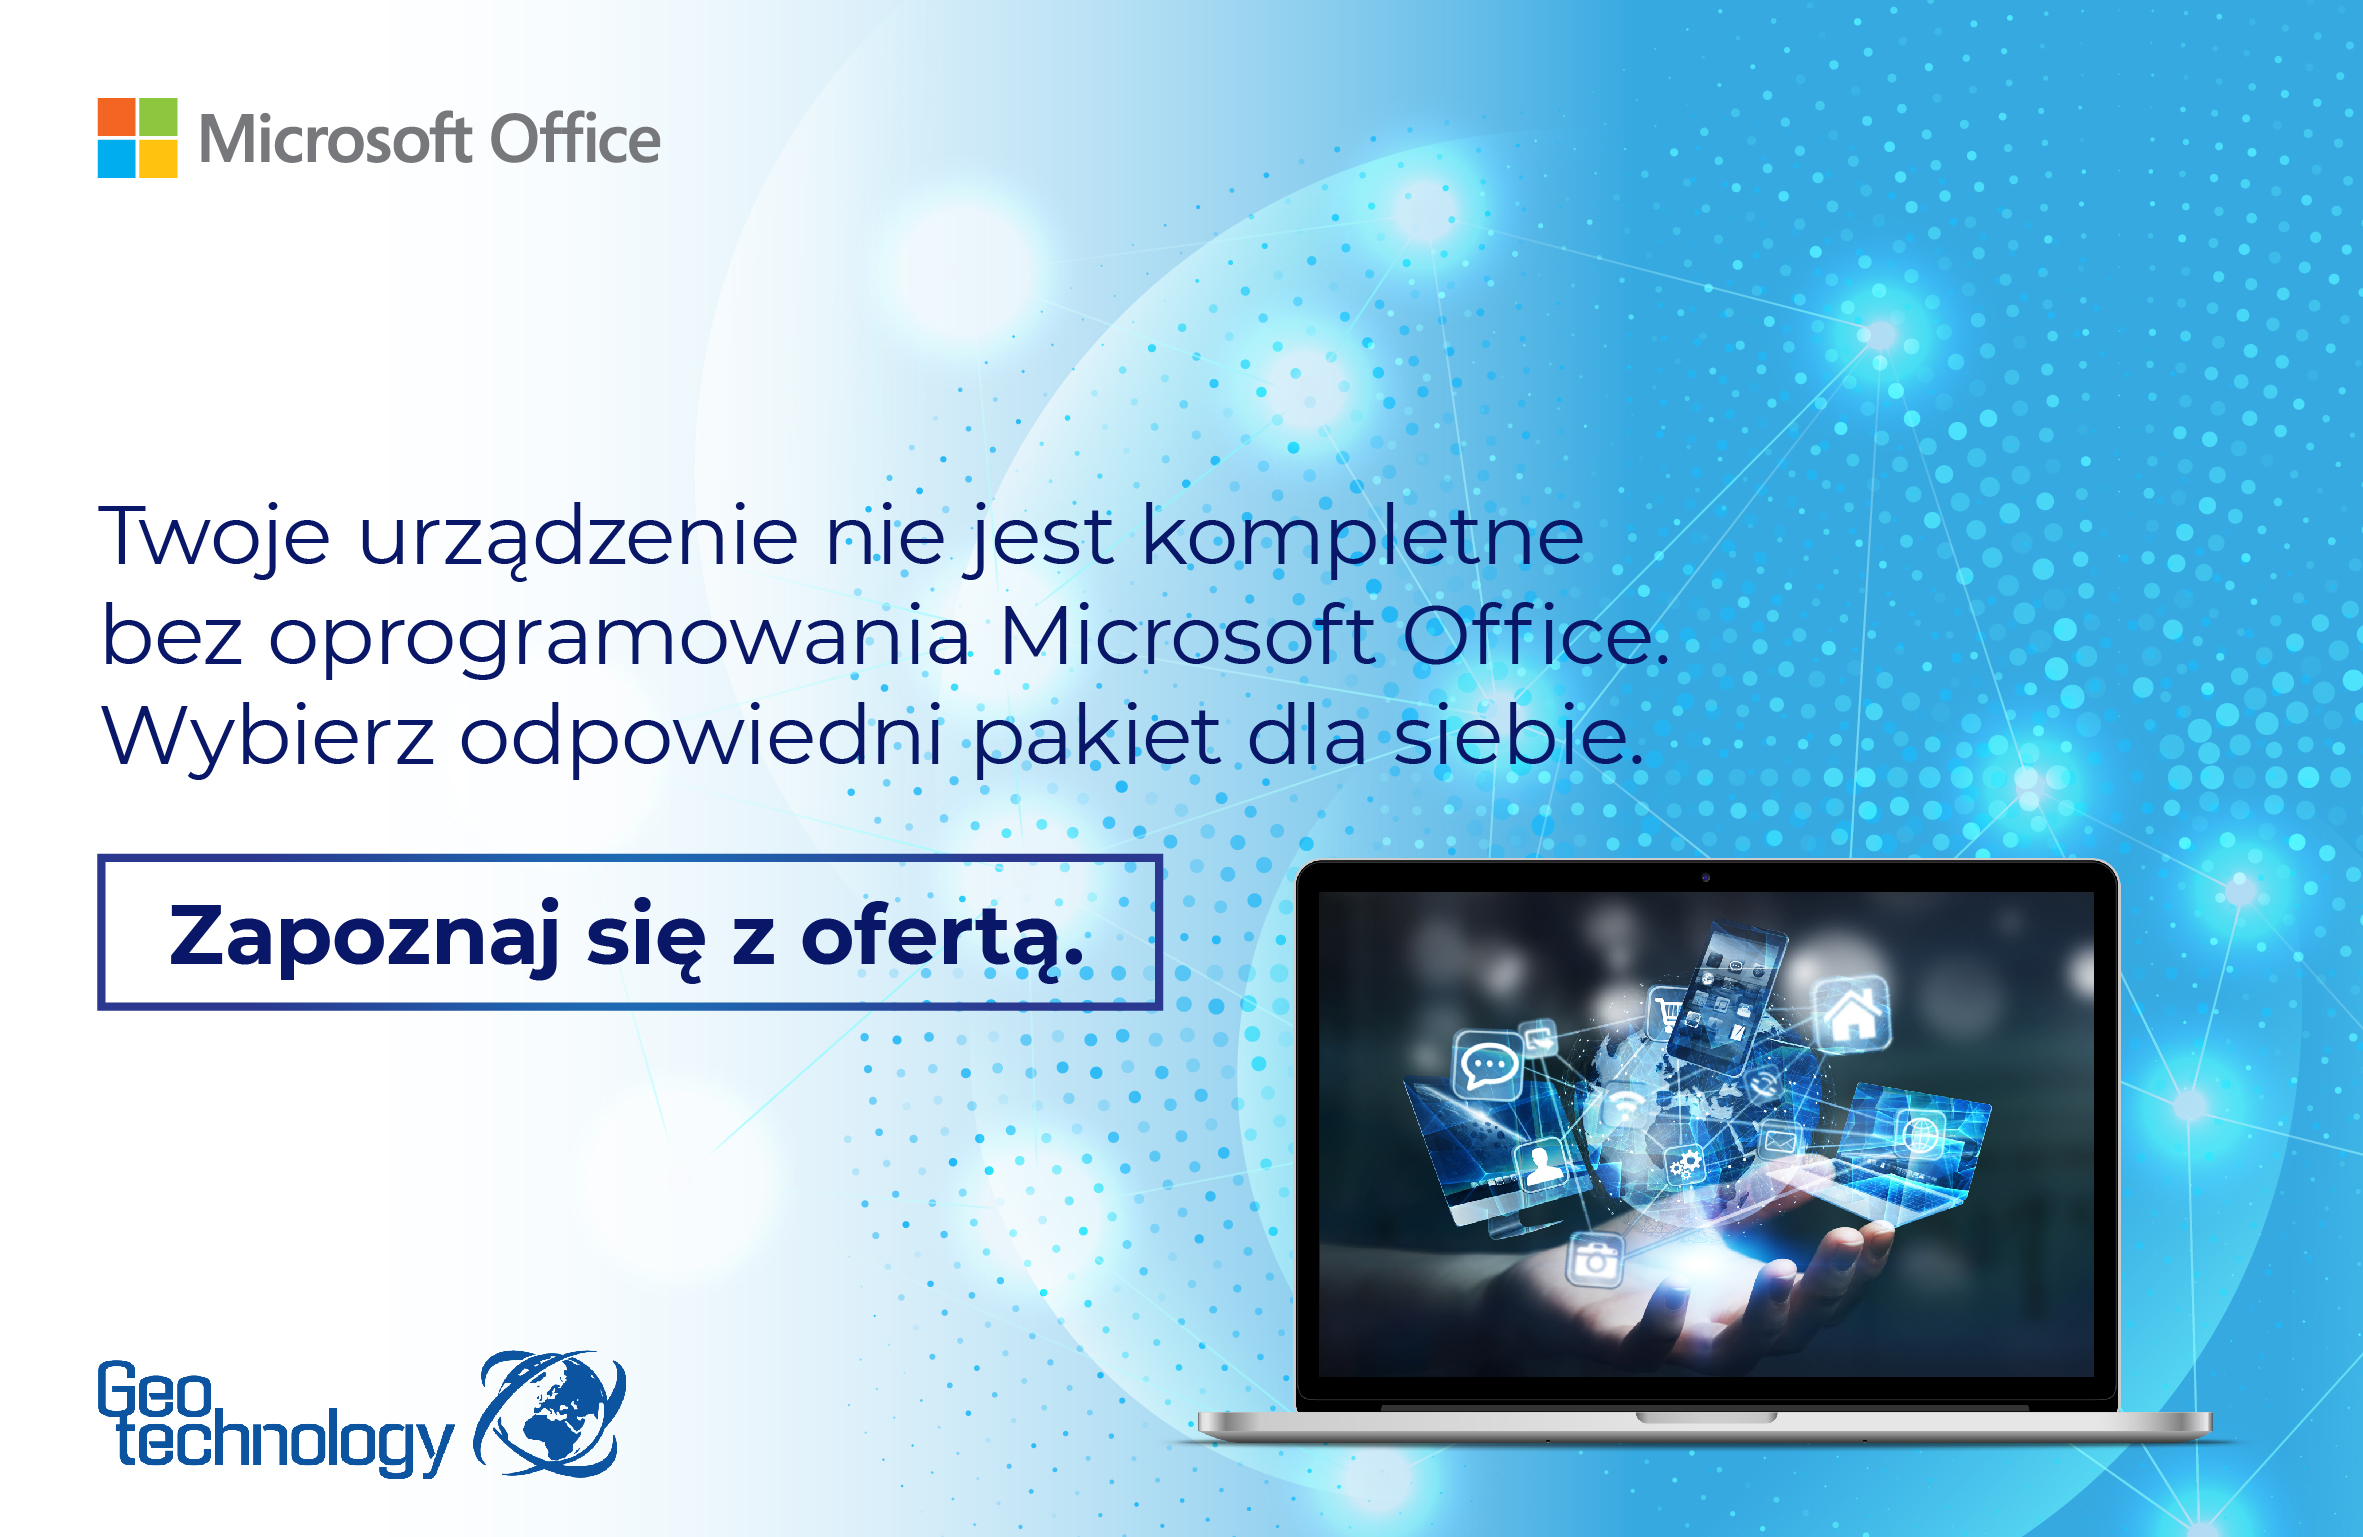 Microsoft Office dla firm - oferta | geotechnology.pl